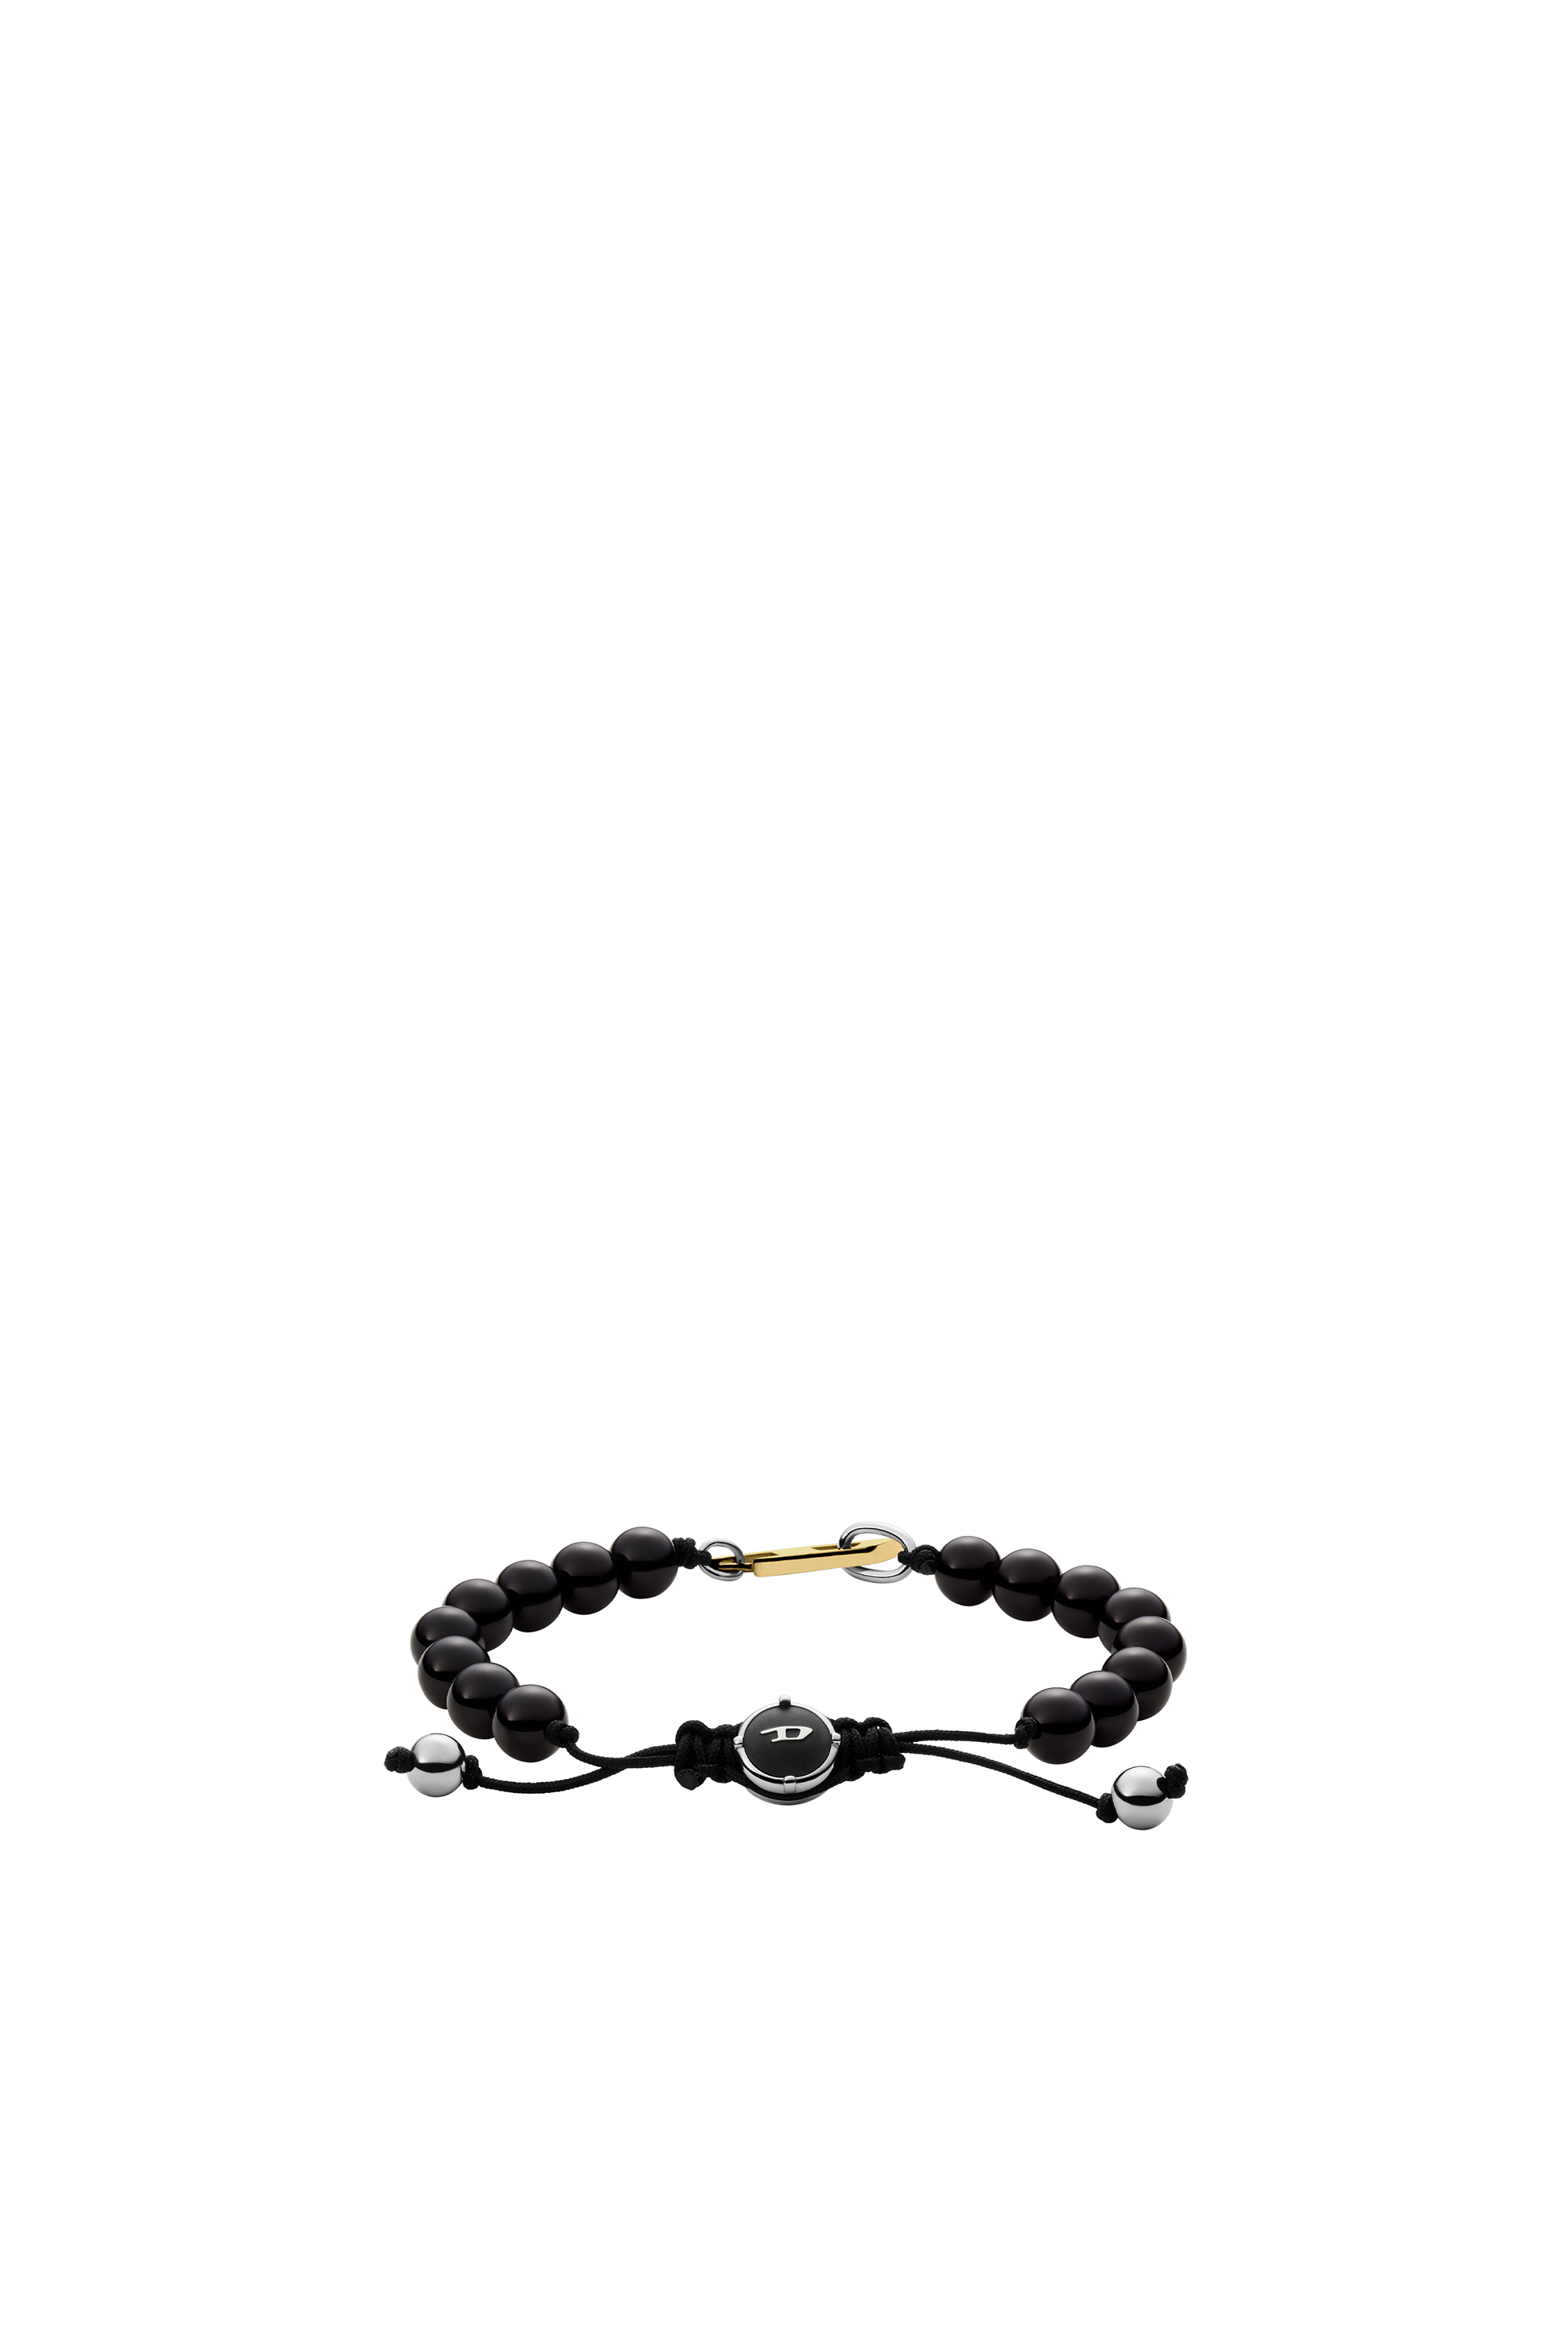 Men's Jewels: Bracelets, Necklaces, Rings | Shop on Diesel.com